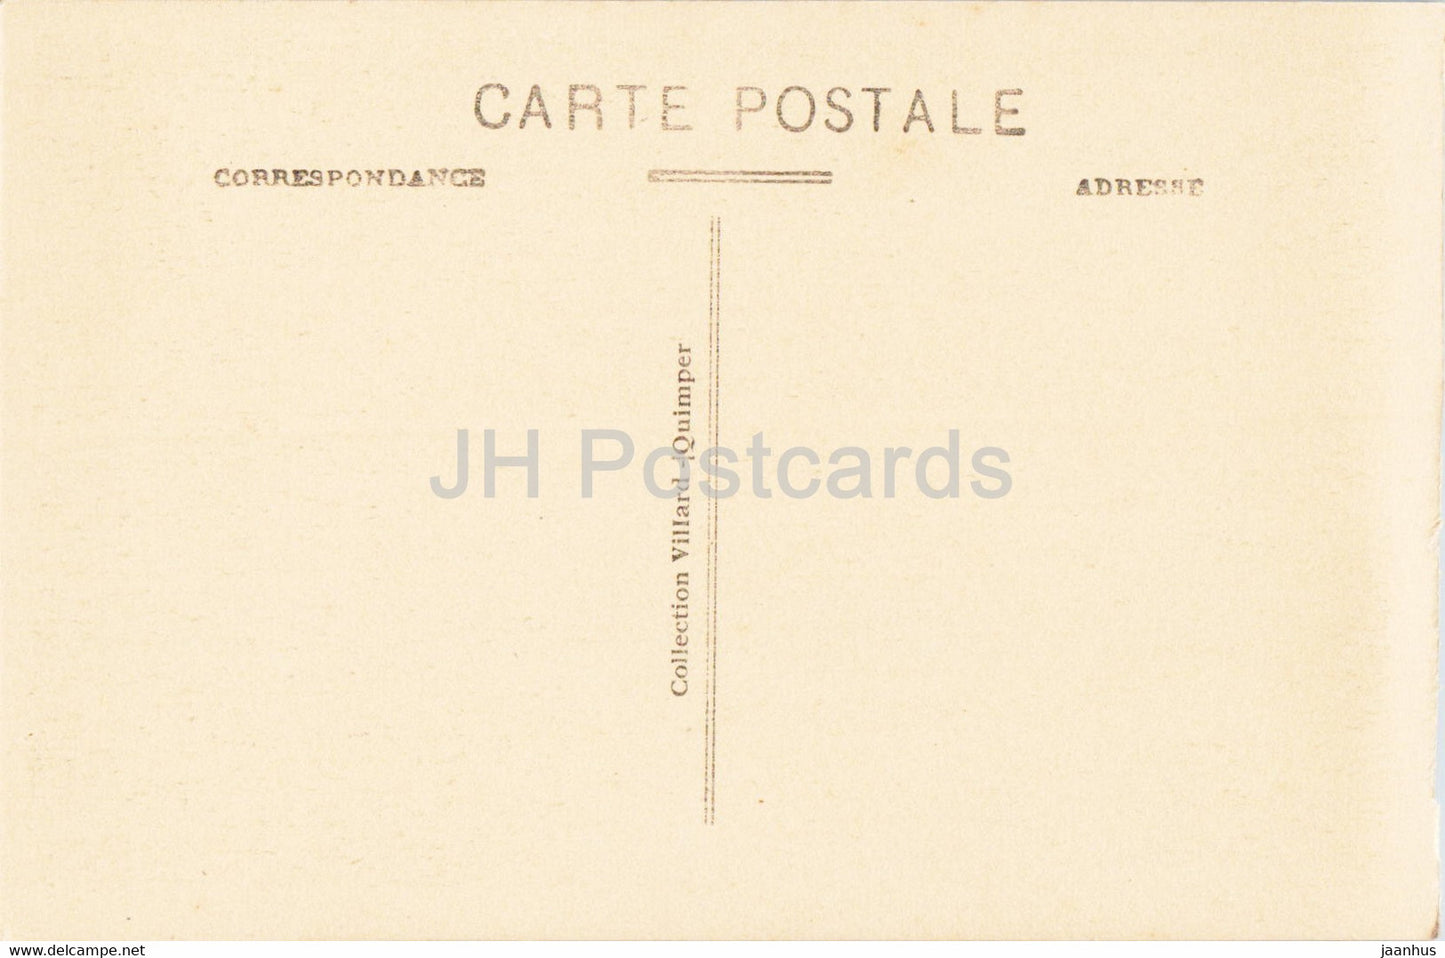 Josselin - Interieur du Chateau - La Bibliotheque - library - castle - 4990 - old postcard - France - unused